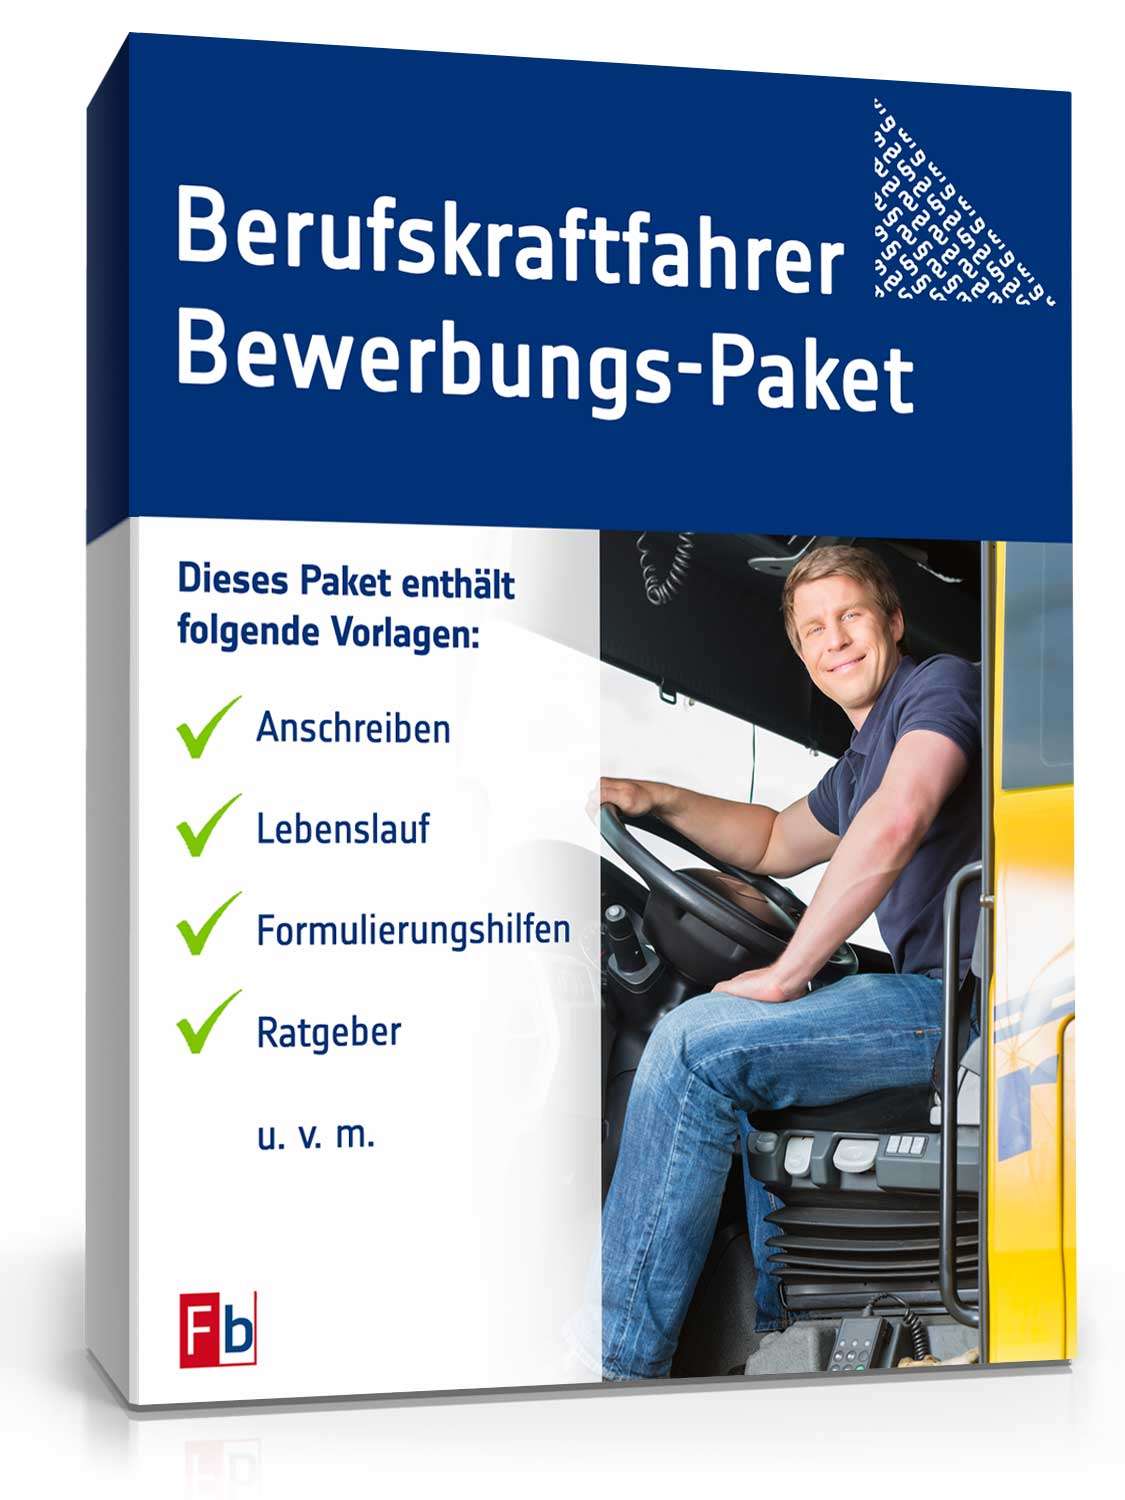 Hauptbild des Produkts: Bewerbungs-Paket Berufskraftfahrer 